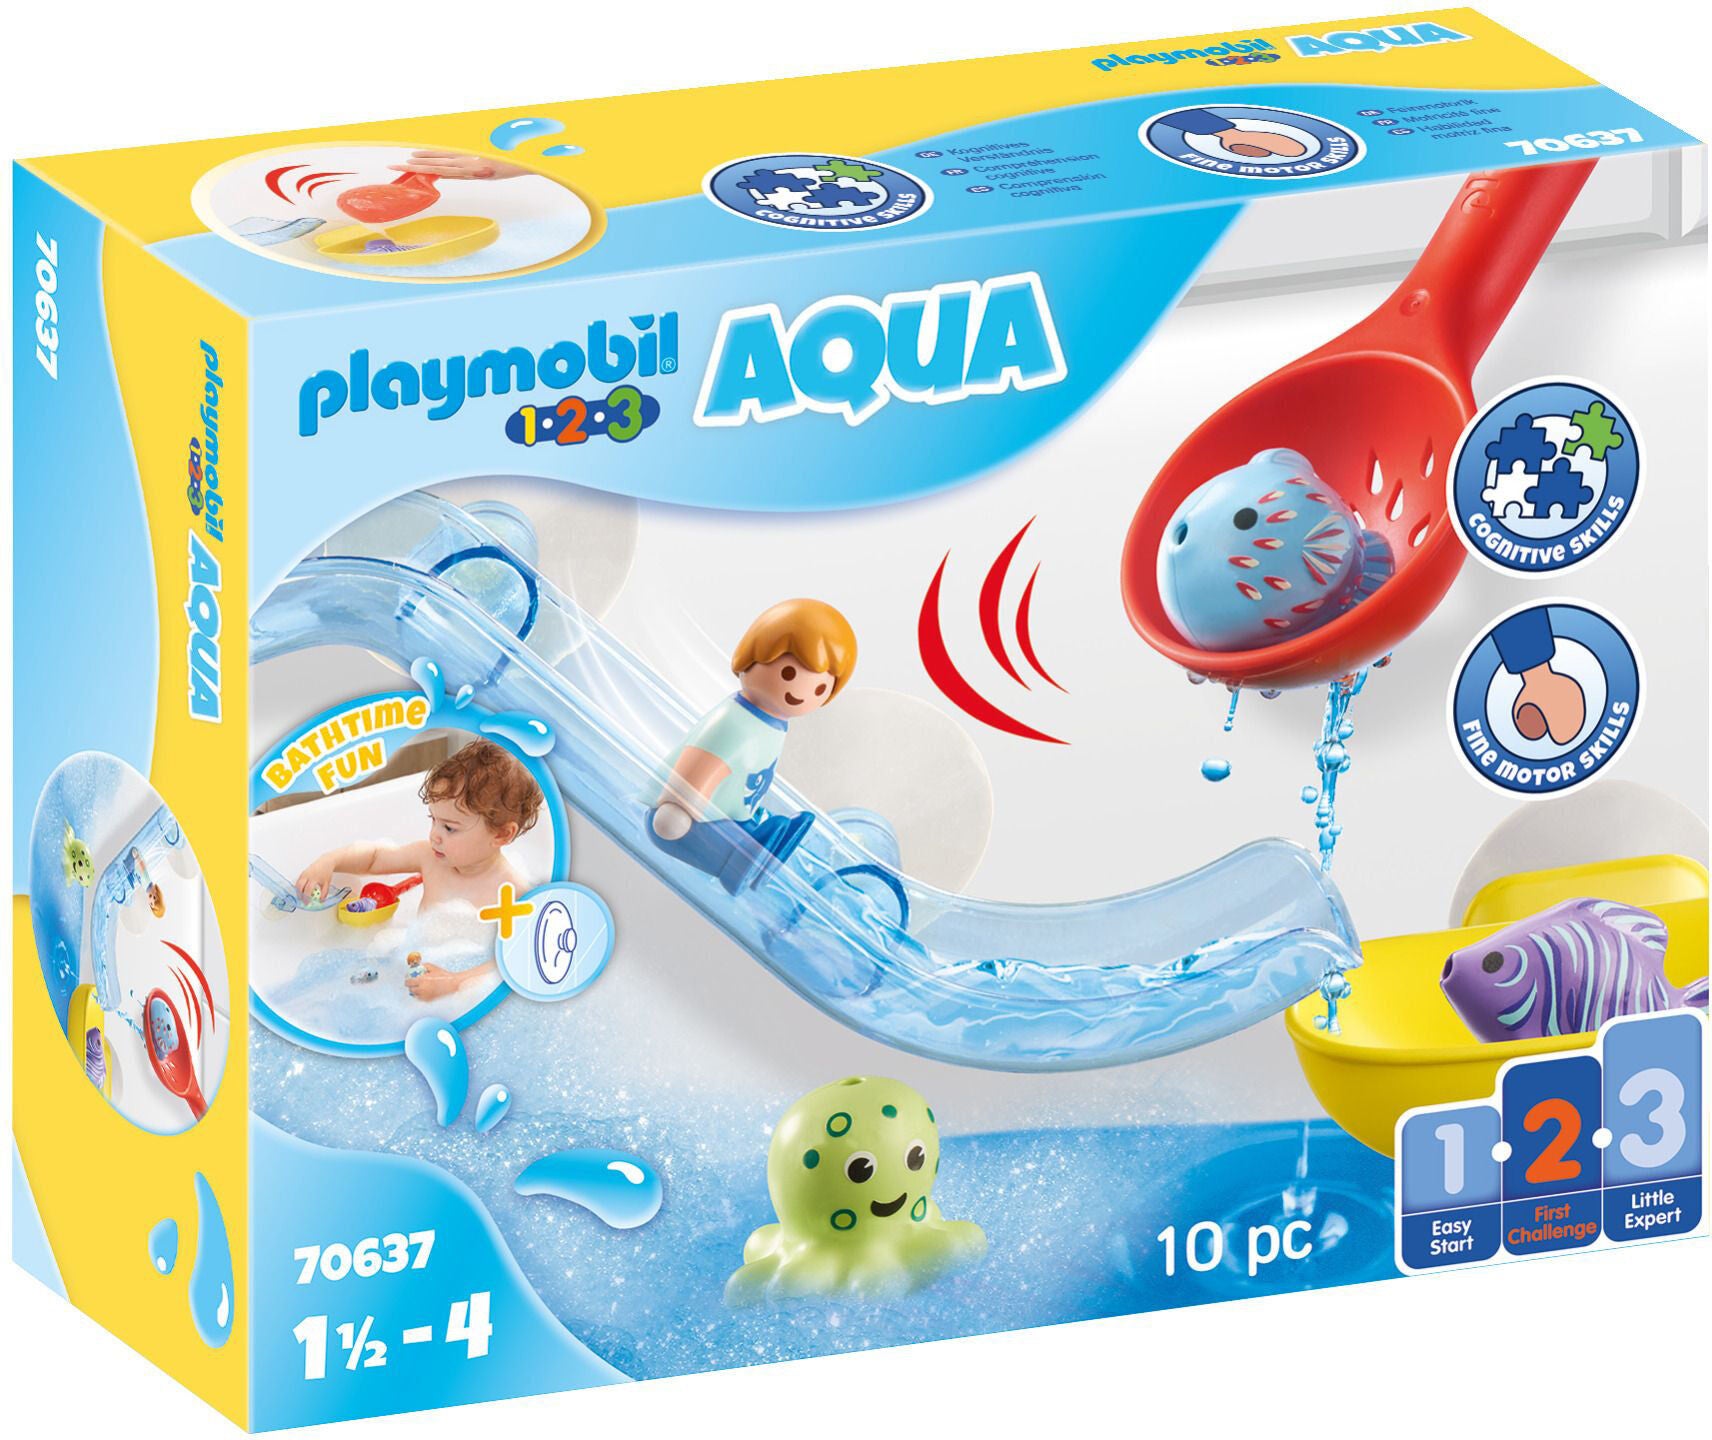 Playmobil 70637 1.2.3 Aqua Baukasten Fangspaß mit Meerestierchen von Playmobil